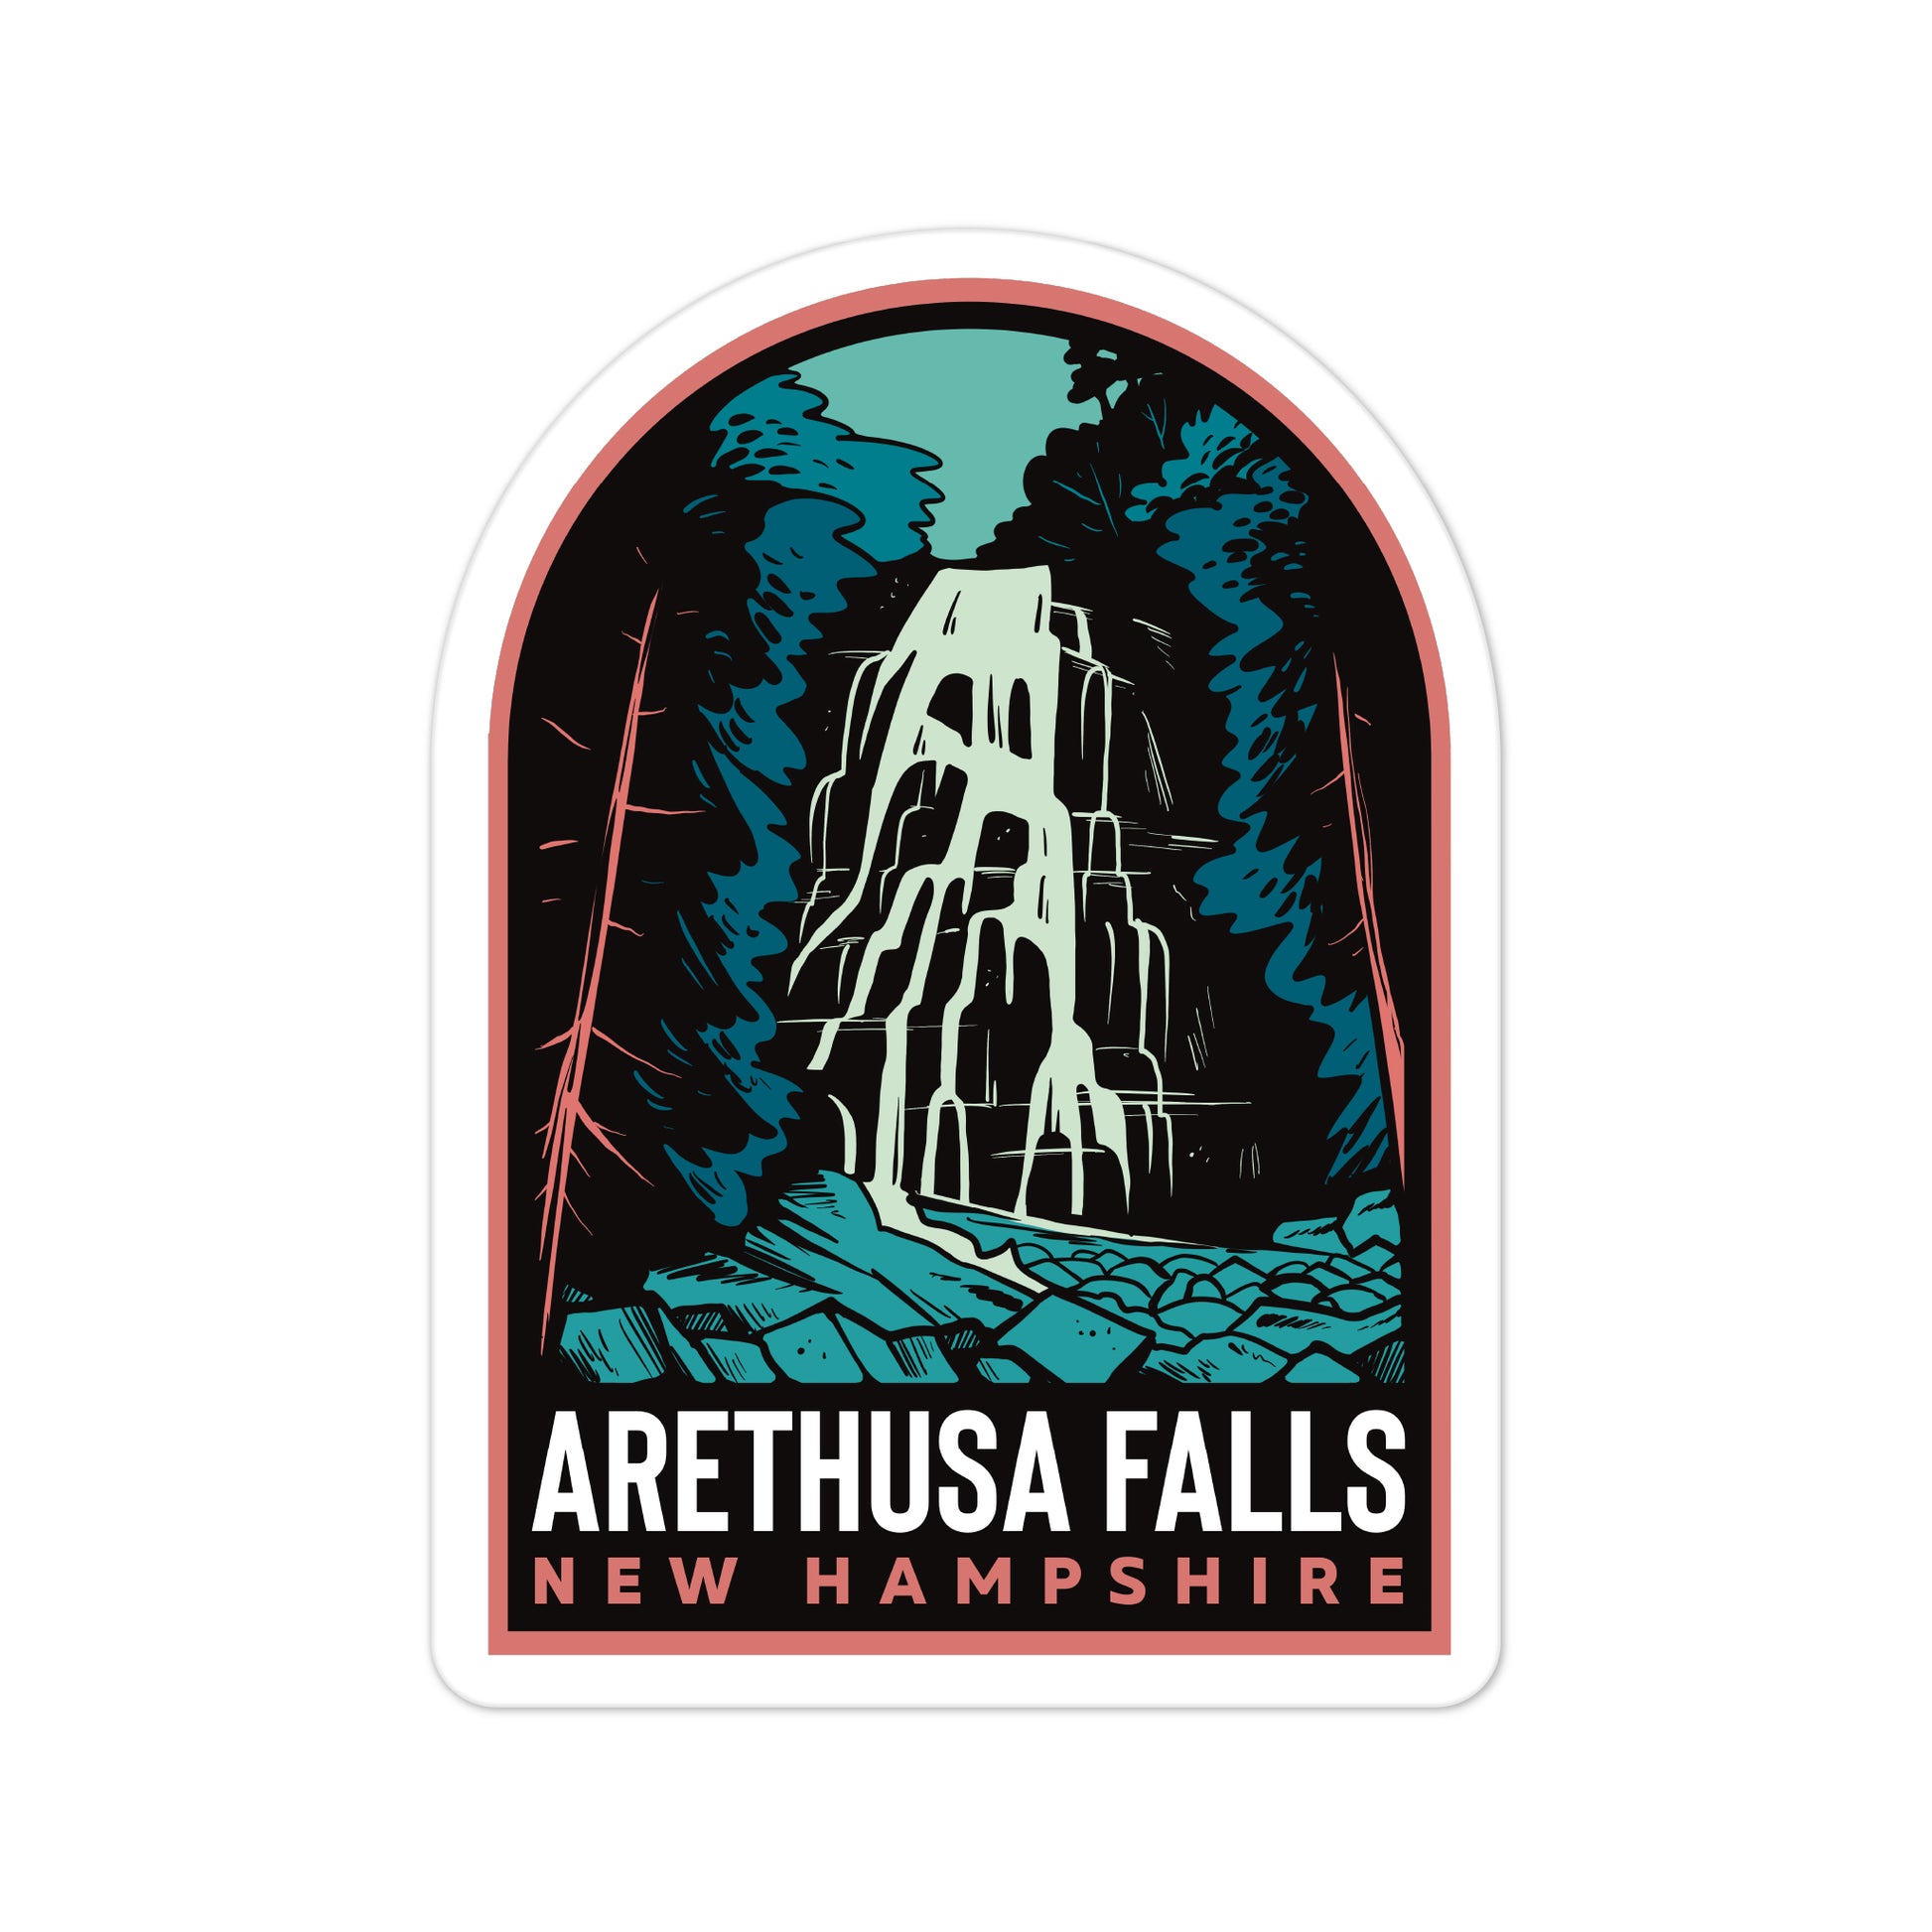 A sticker of Arethusa Falls